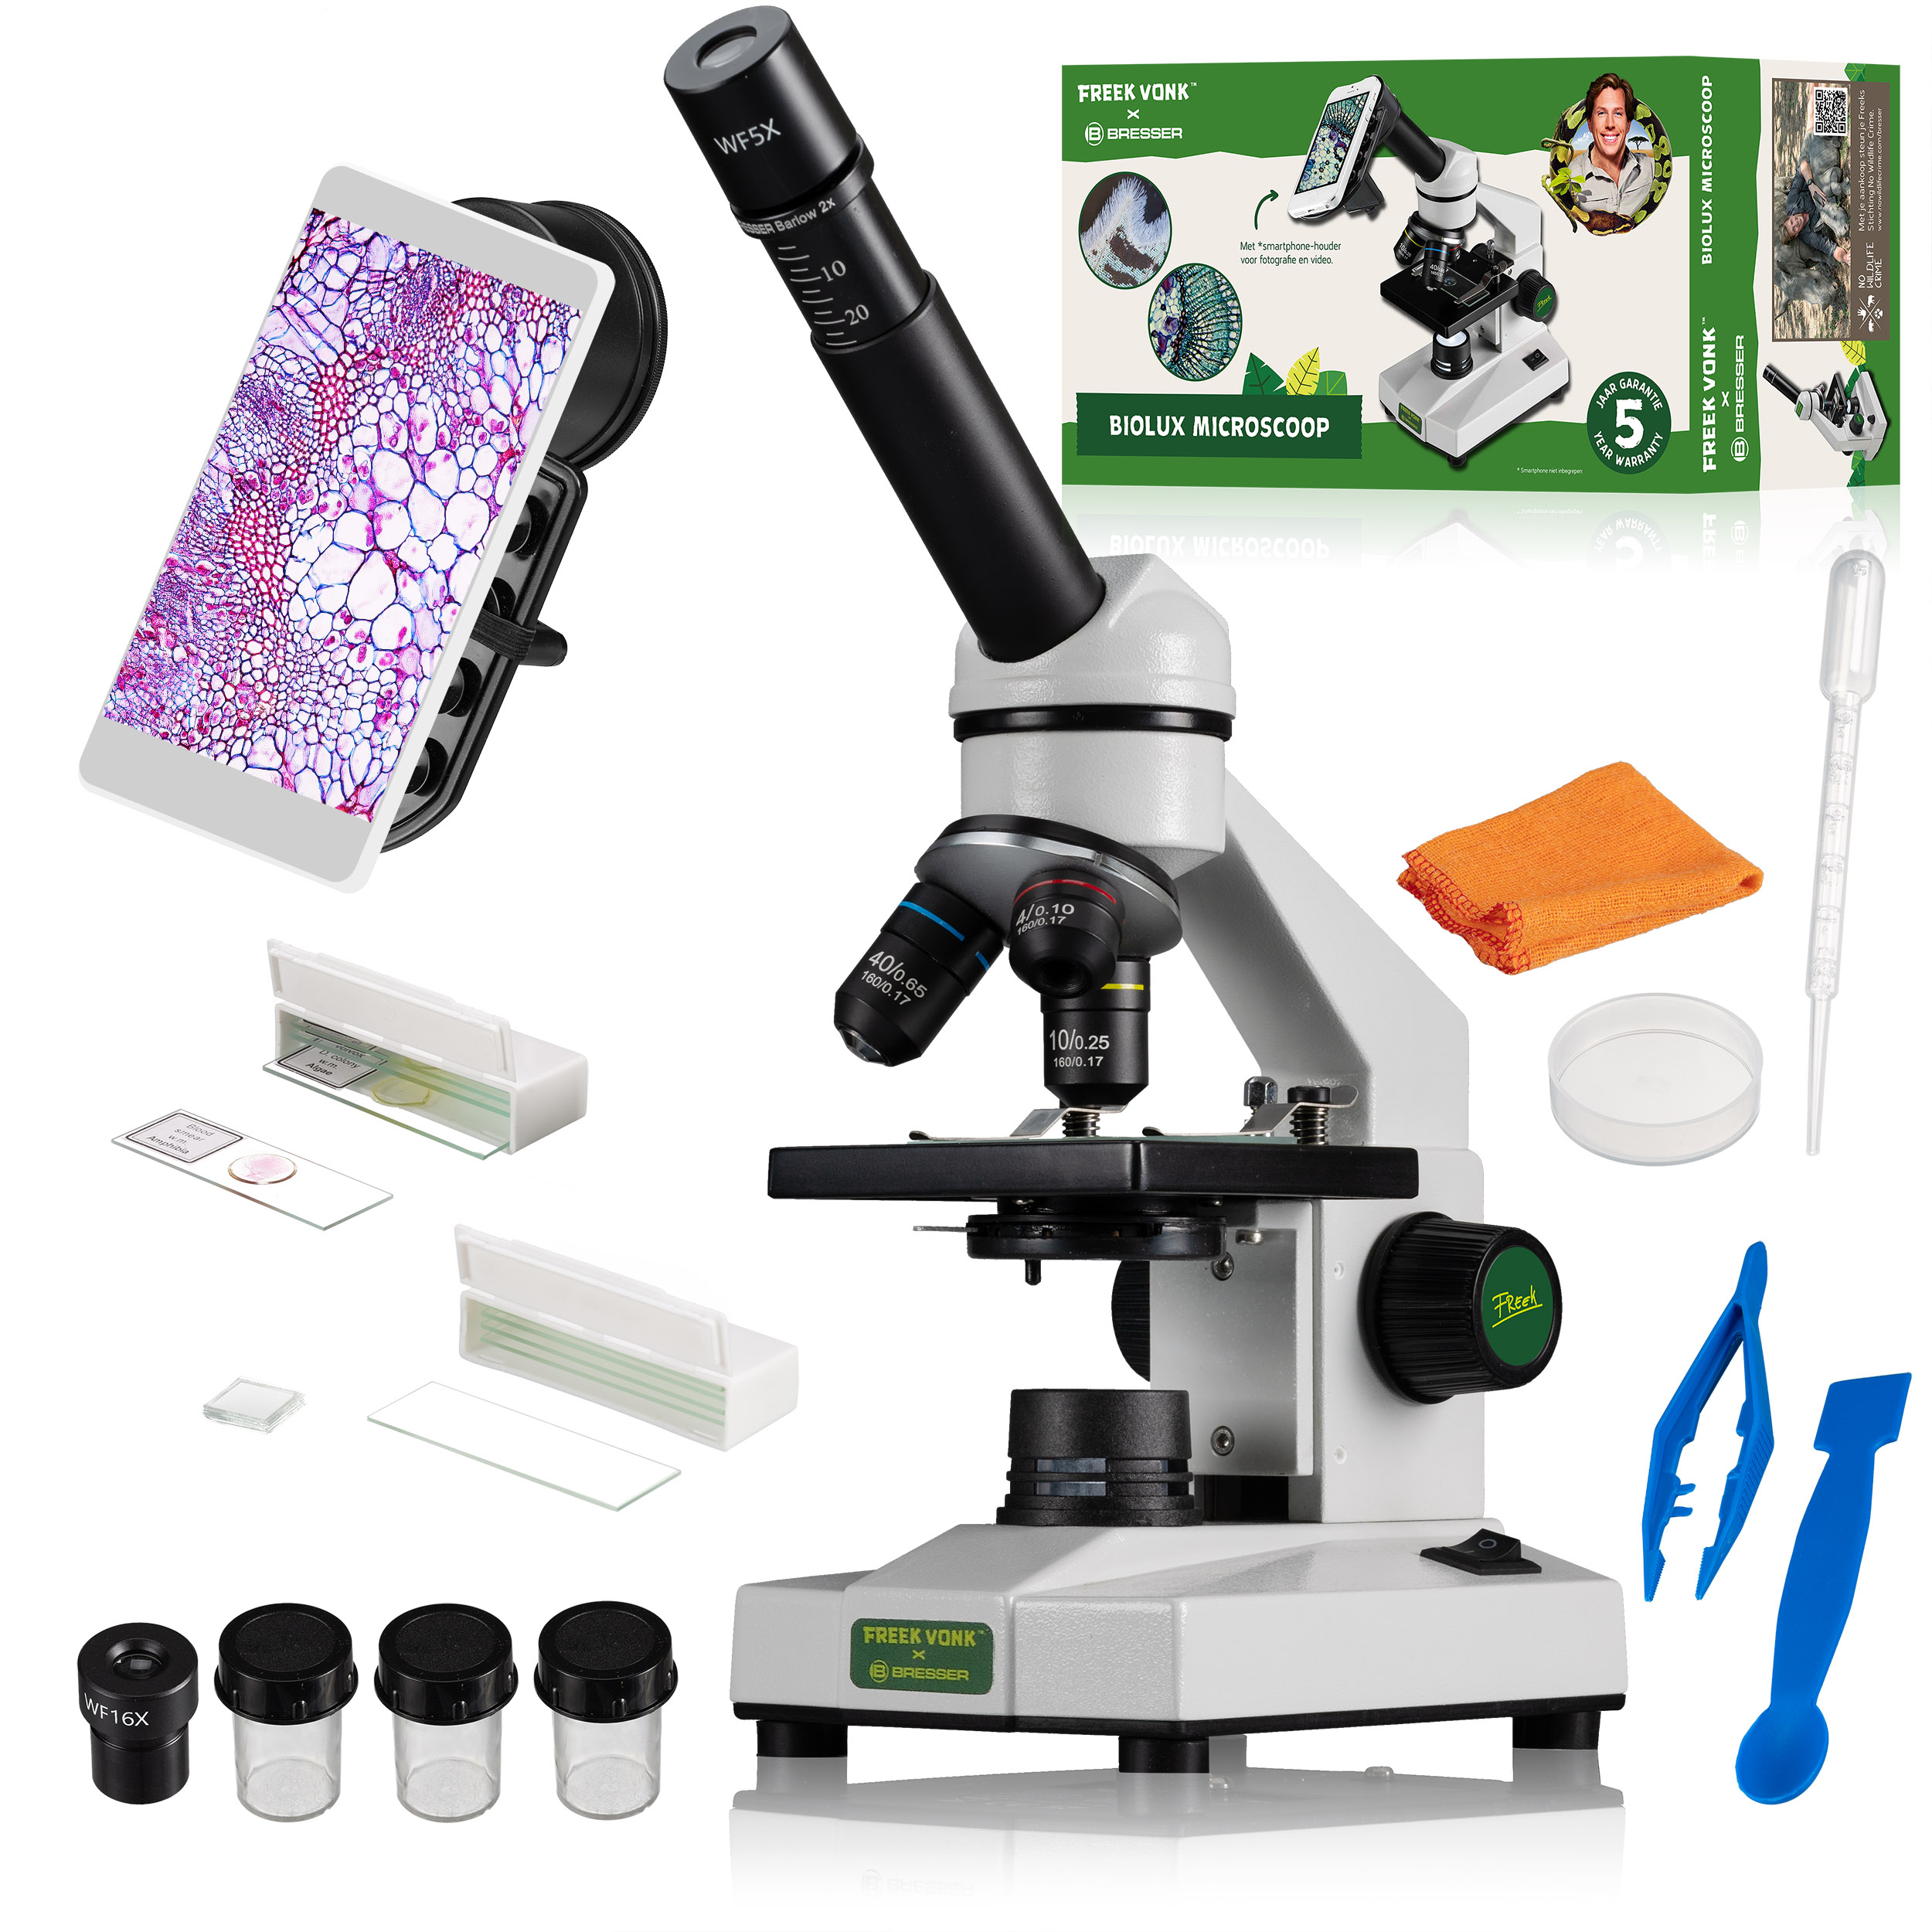 FREEK VONK x BRESSER Microscope Biolux